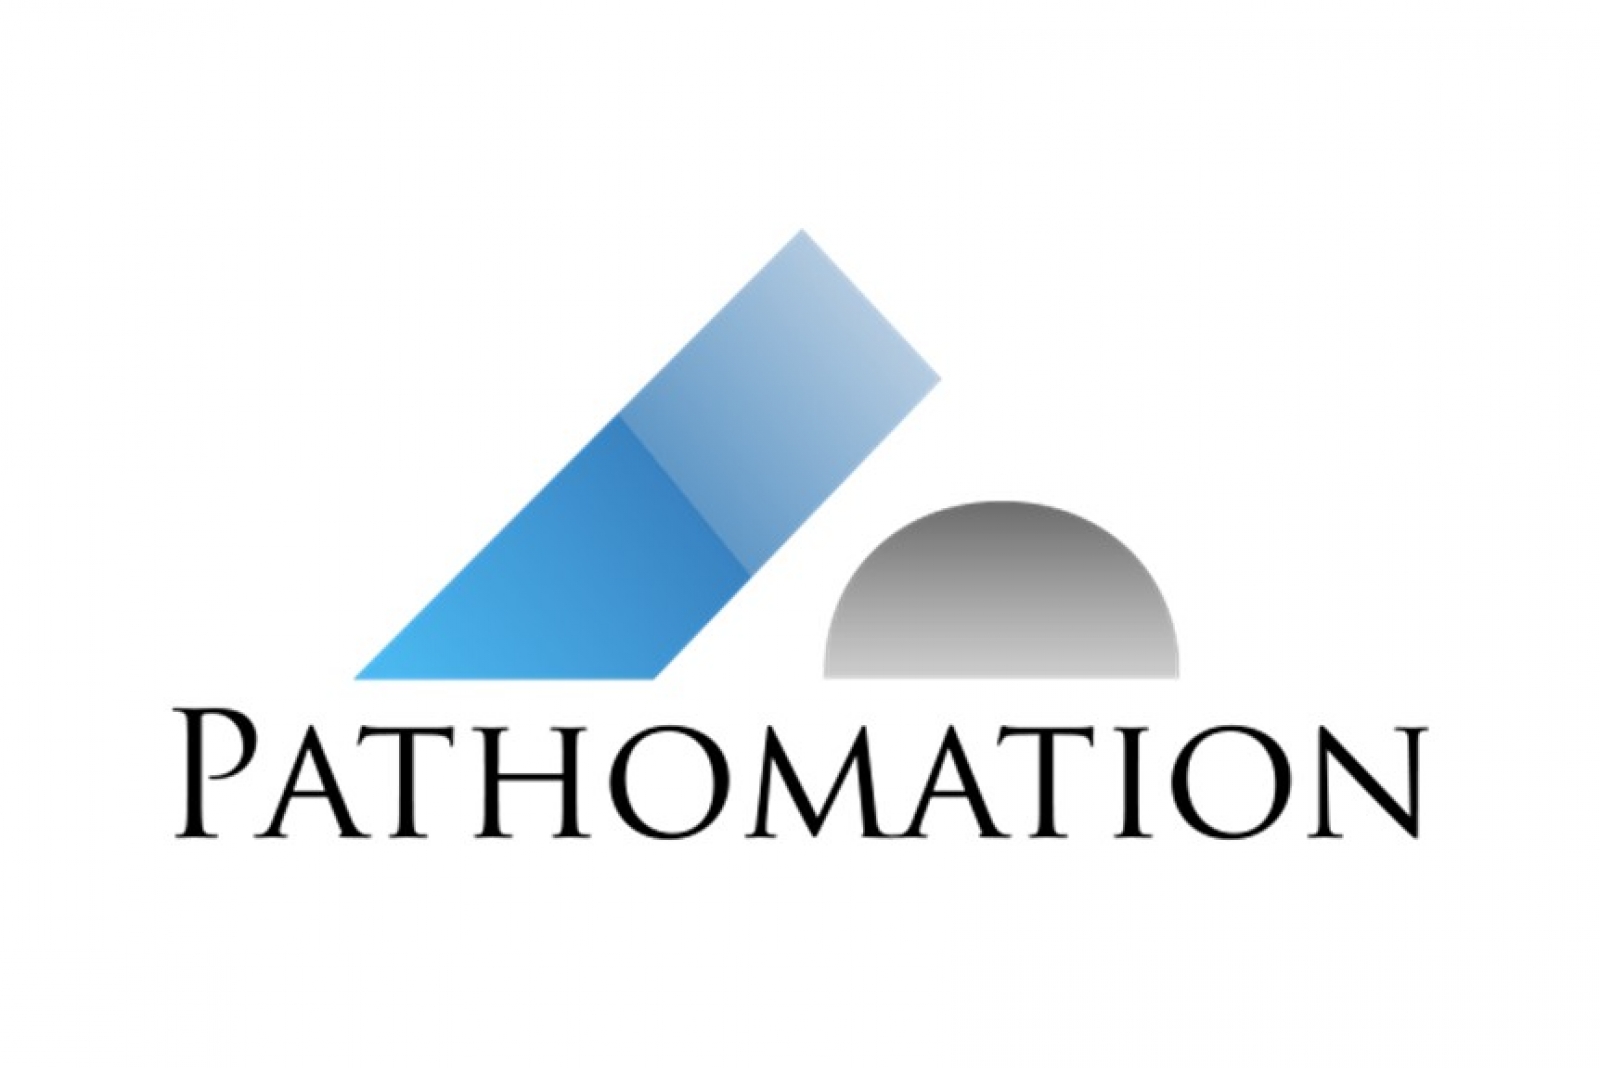 Pathomation sponsor